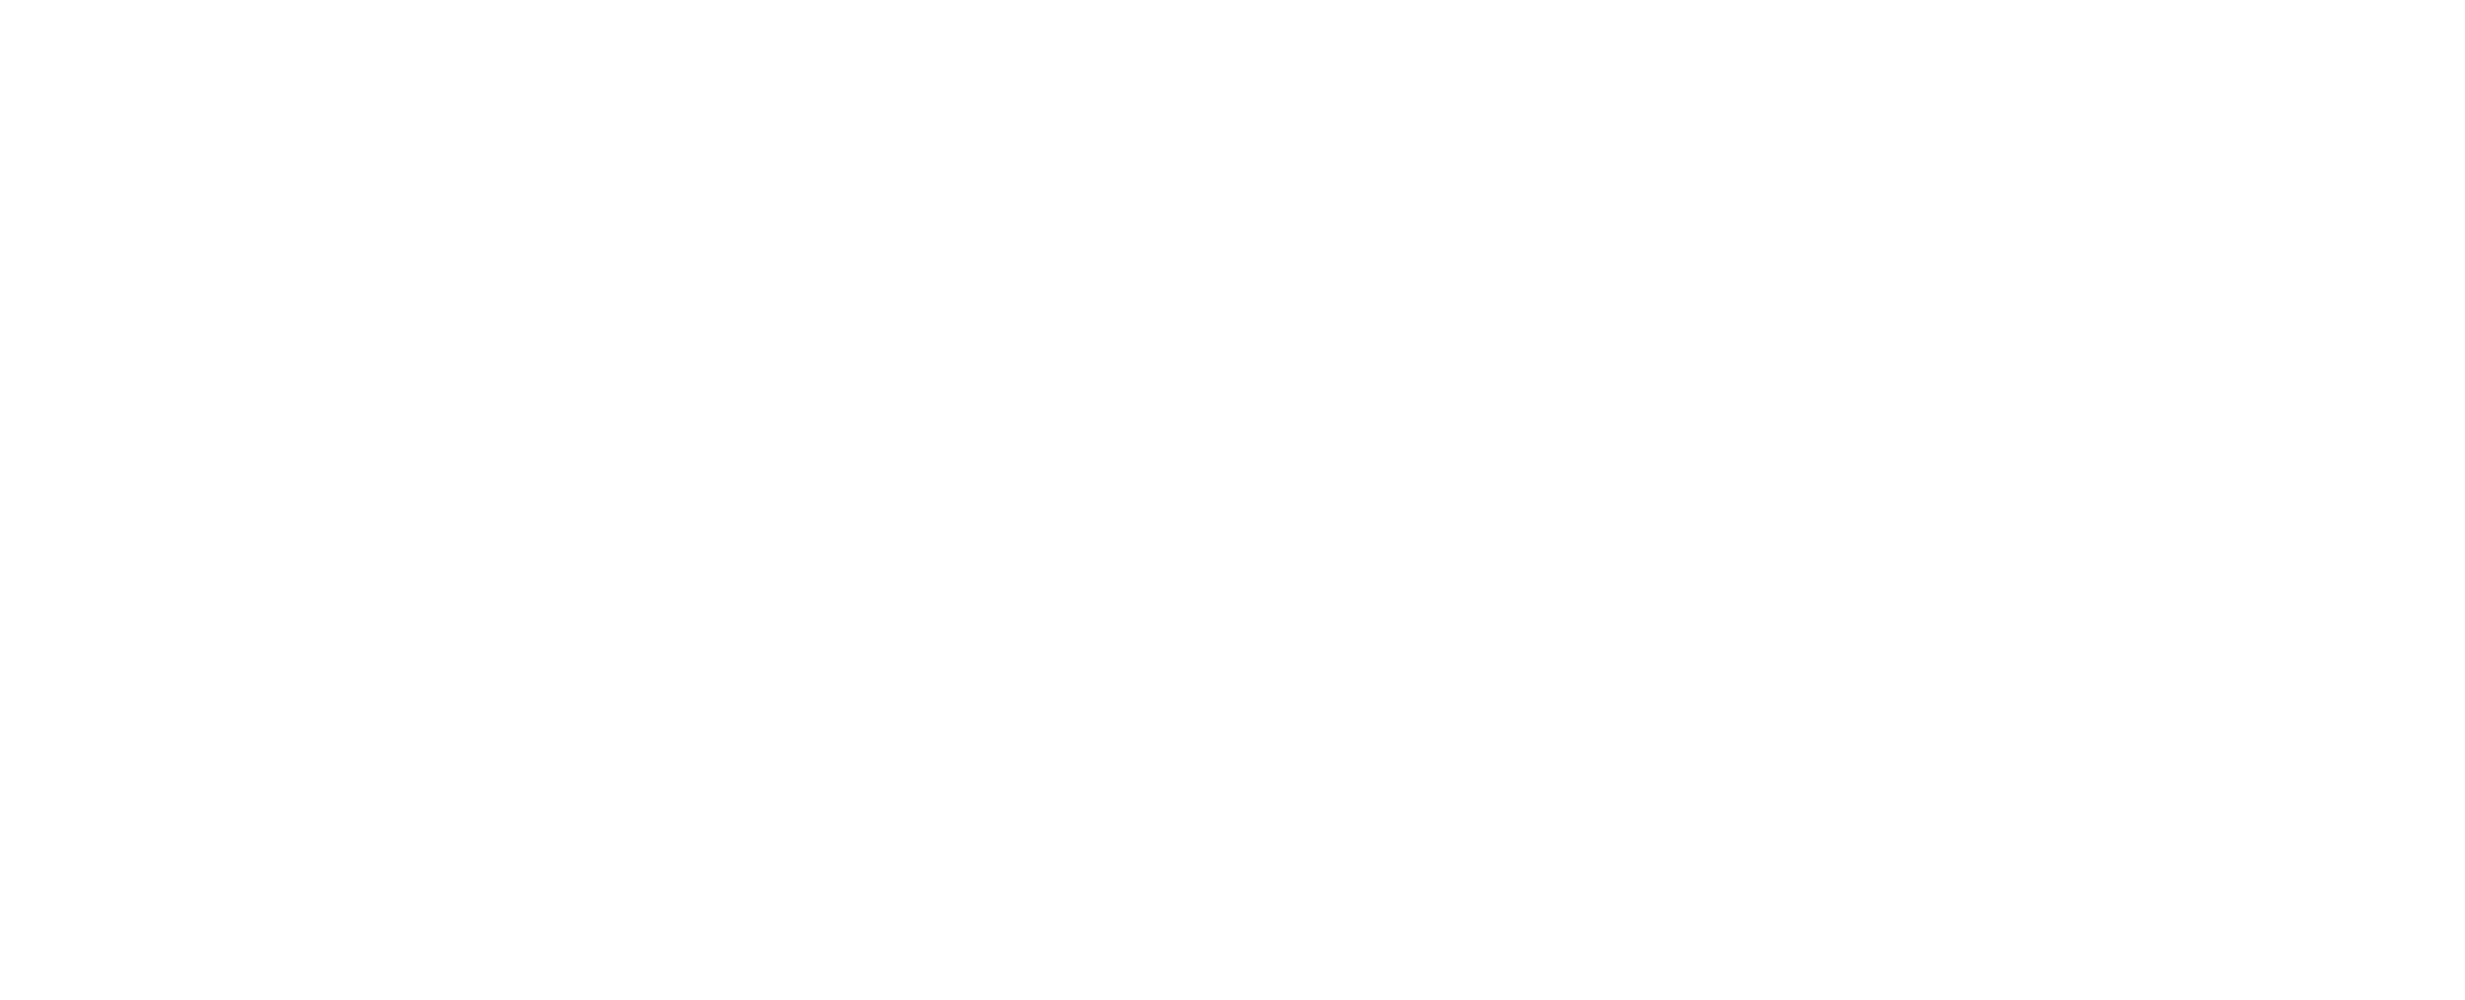 Eurke_Plain_Text_Logo.png